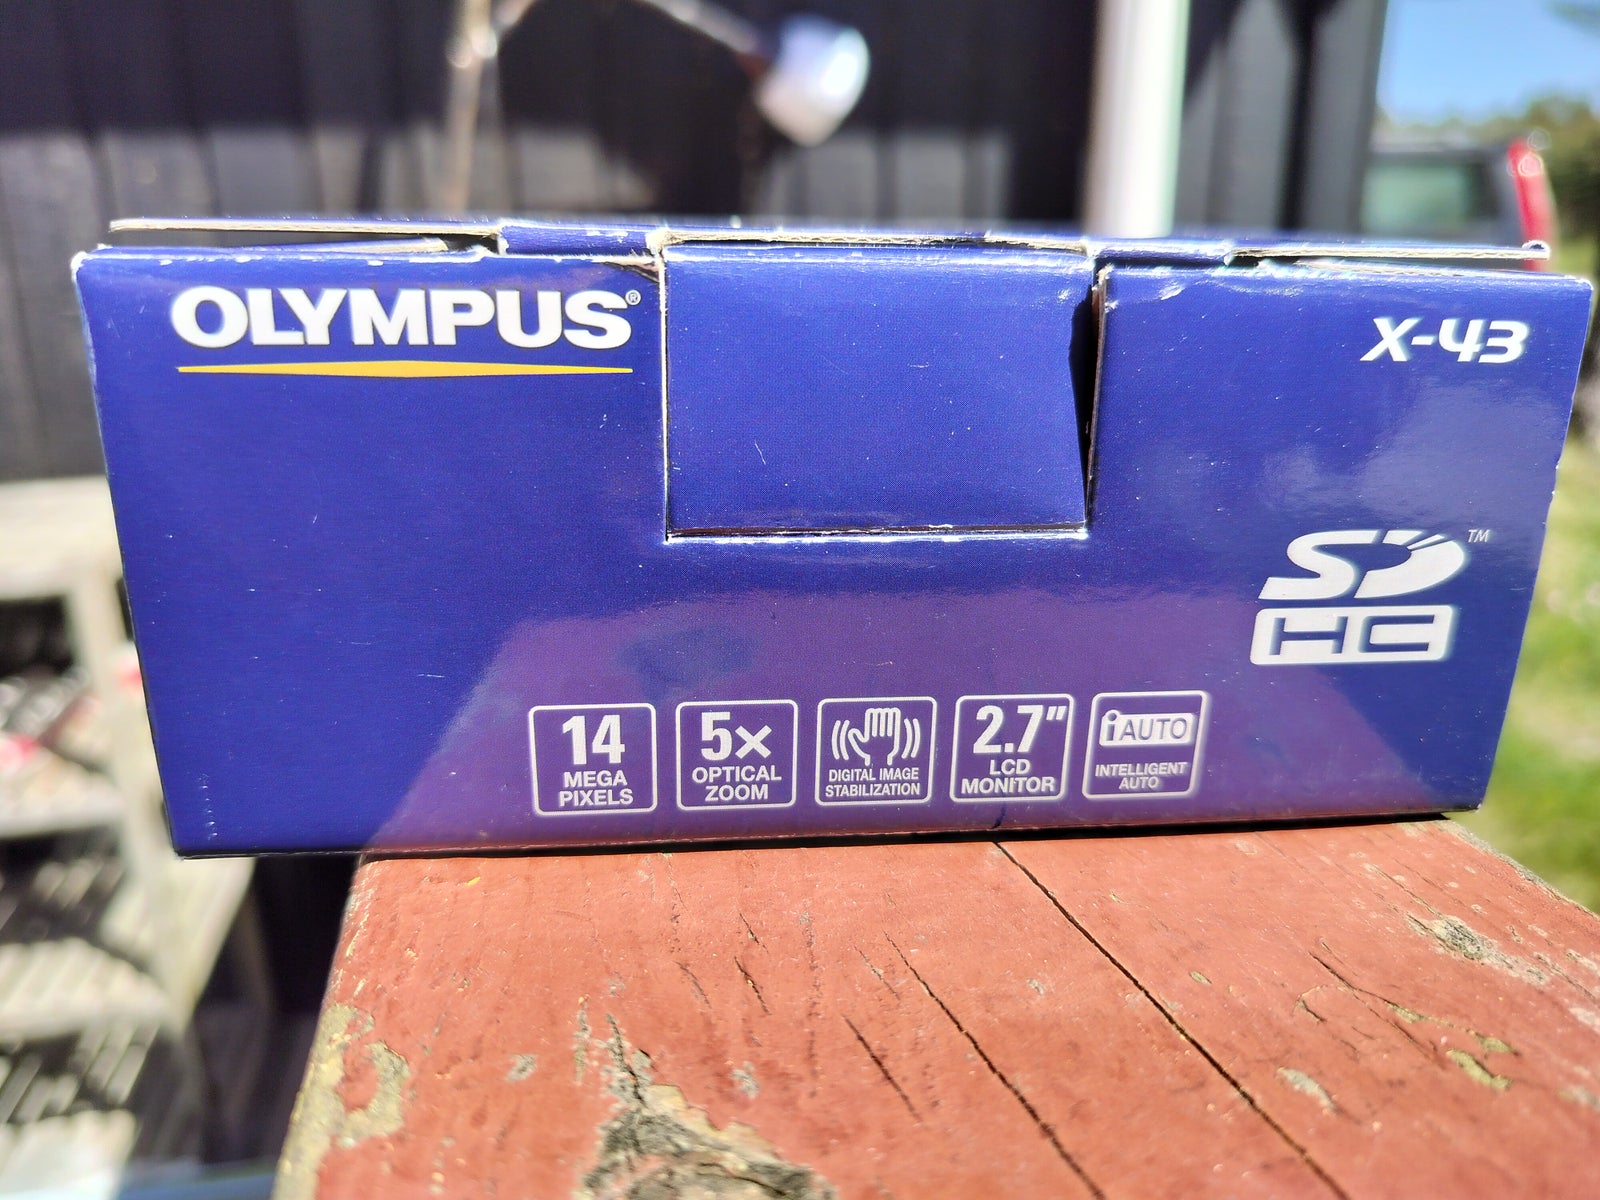 Olympus X-43, 14.0 megapixels, 5 x optisk zoom